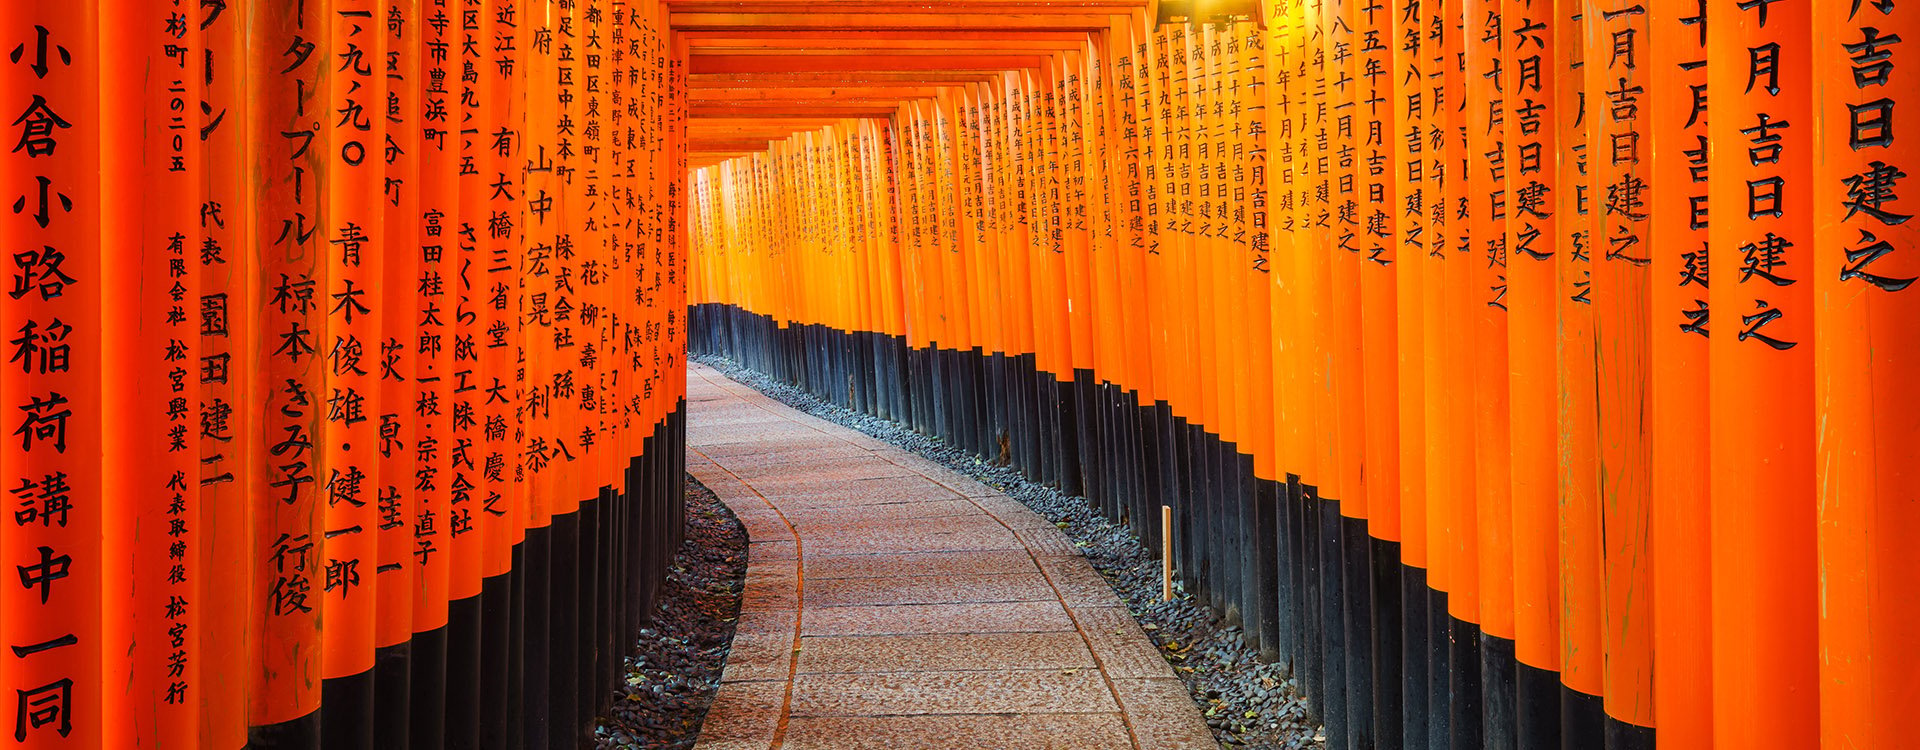 Red Torii gates in Fushimi Inari Shrine, Kyoto, Japan